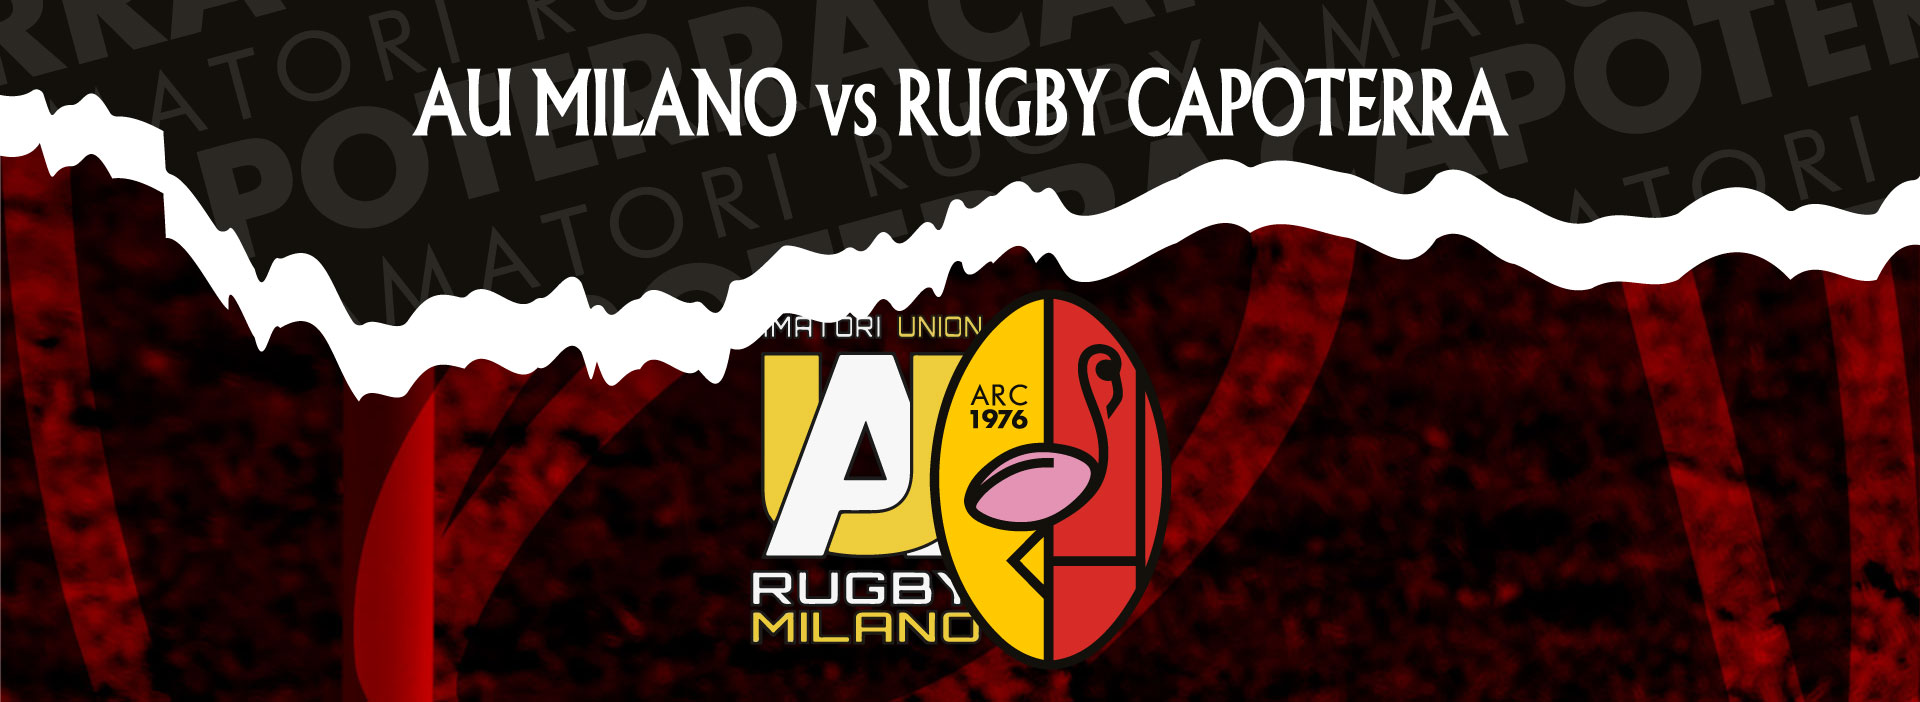 AU Milano vs Rugby Capoterra